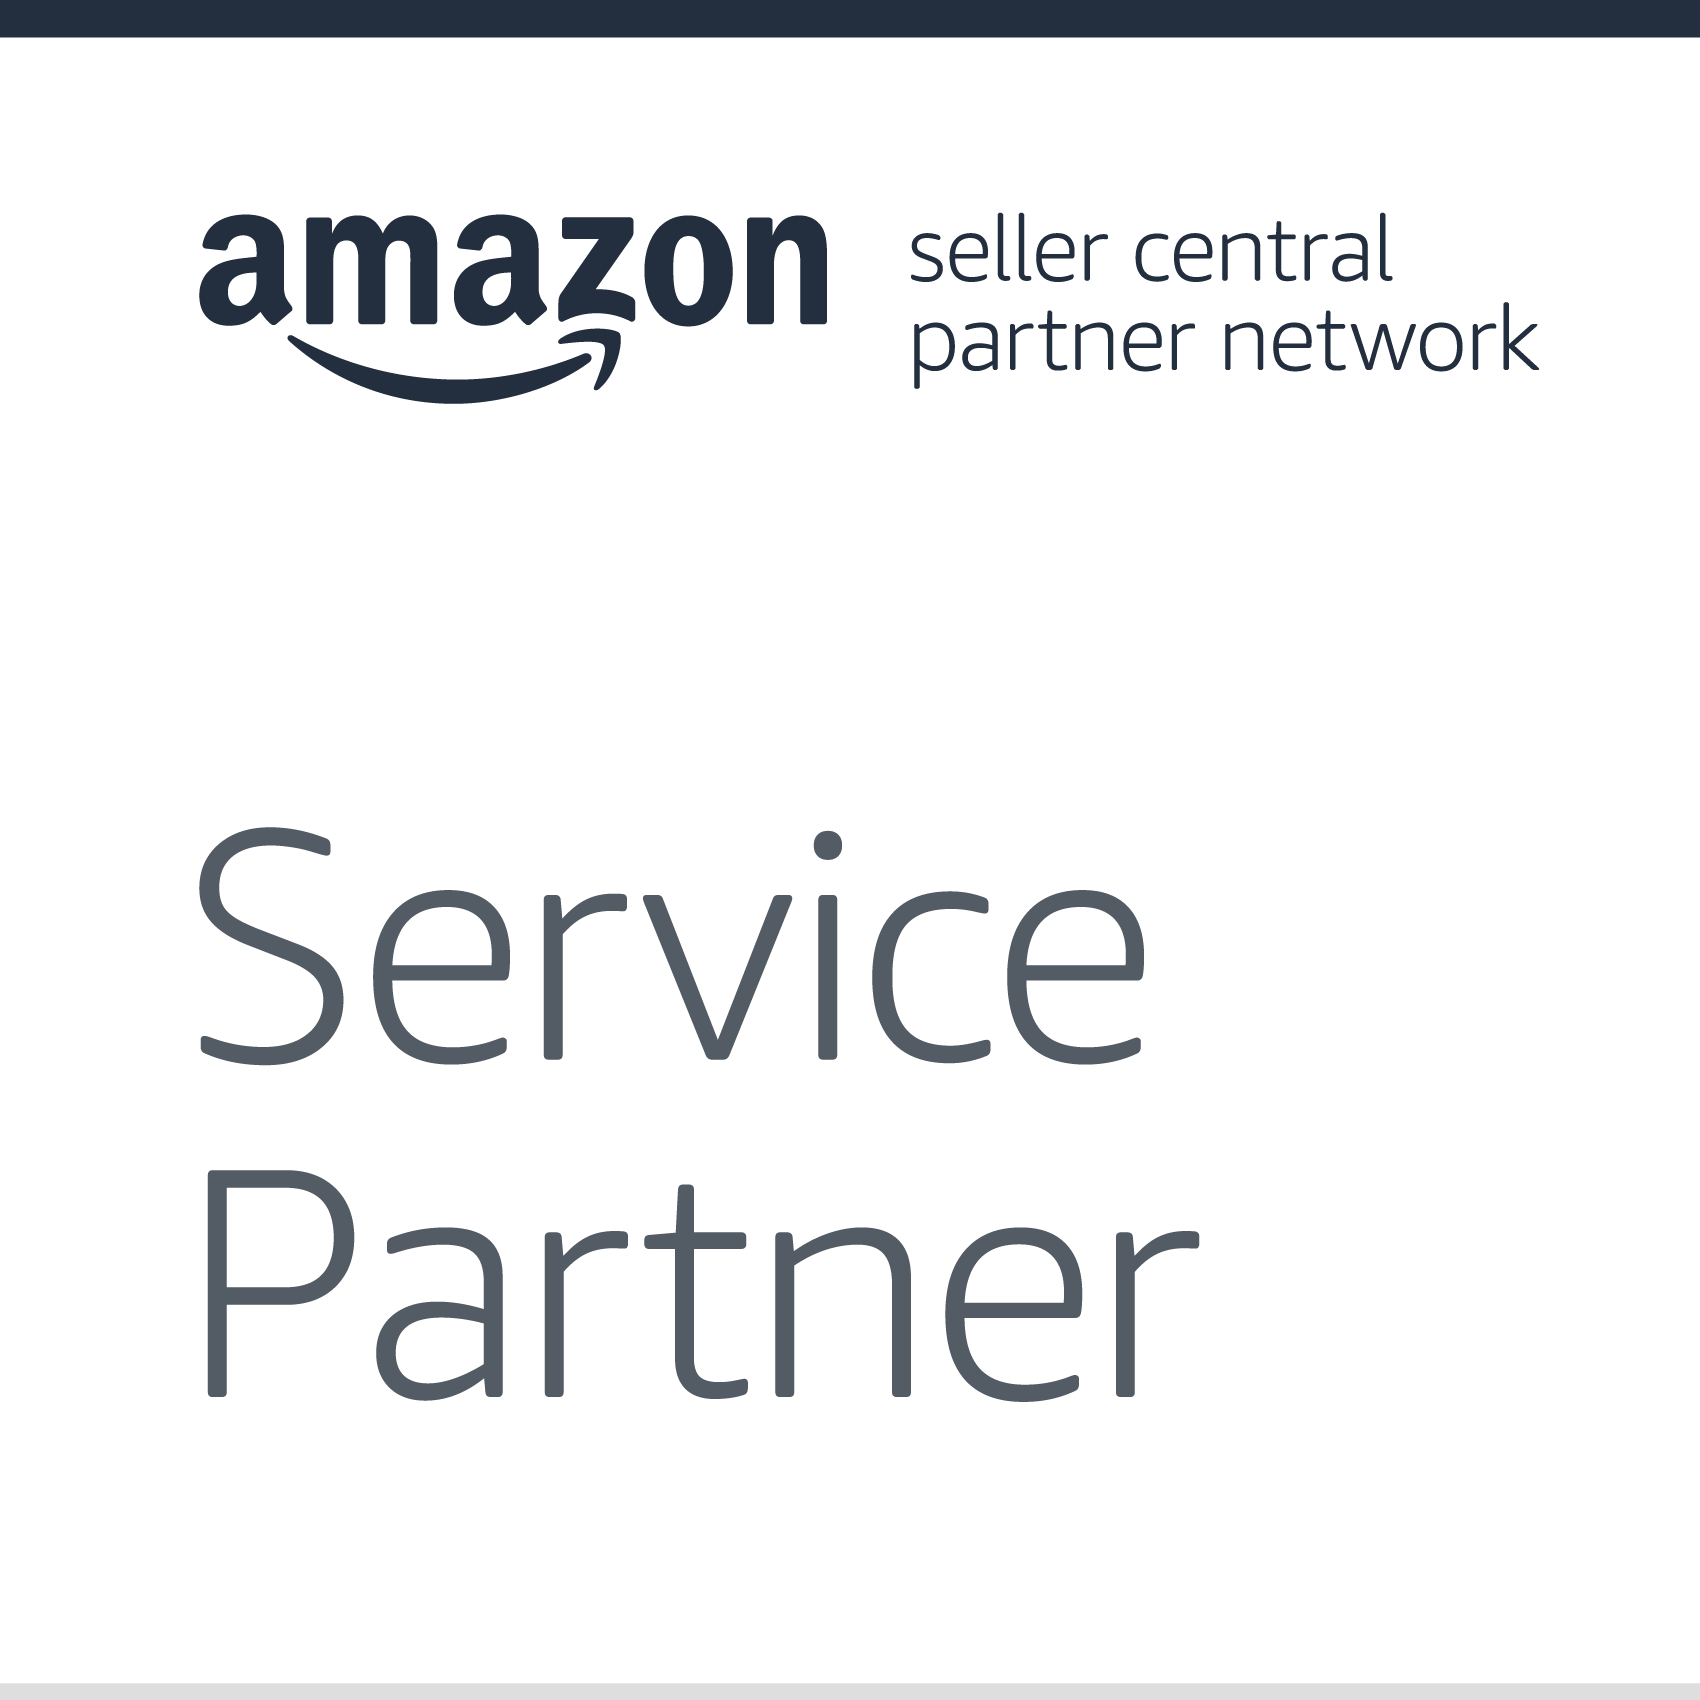 Amazon Seller Central Partner Network Service Partner